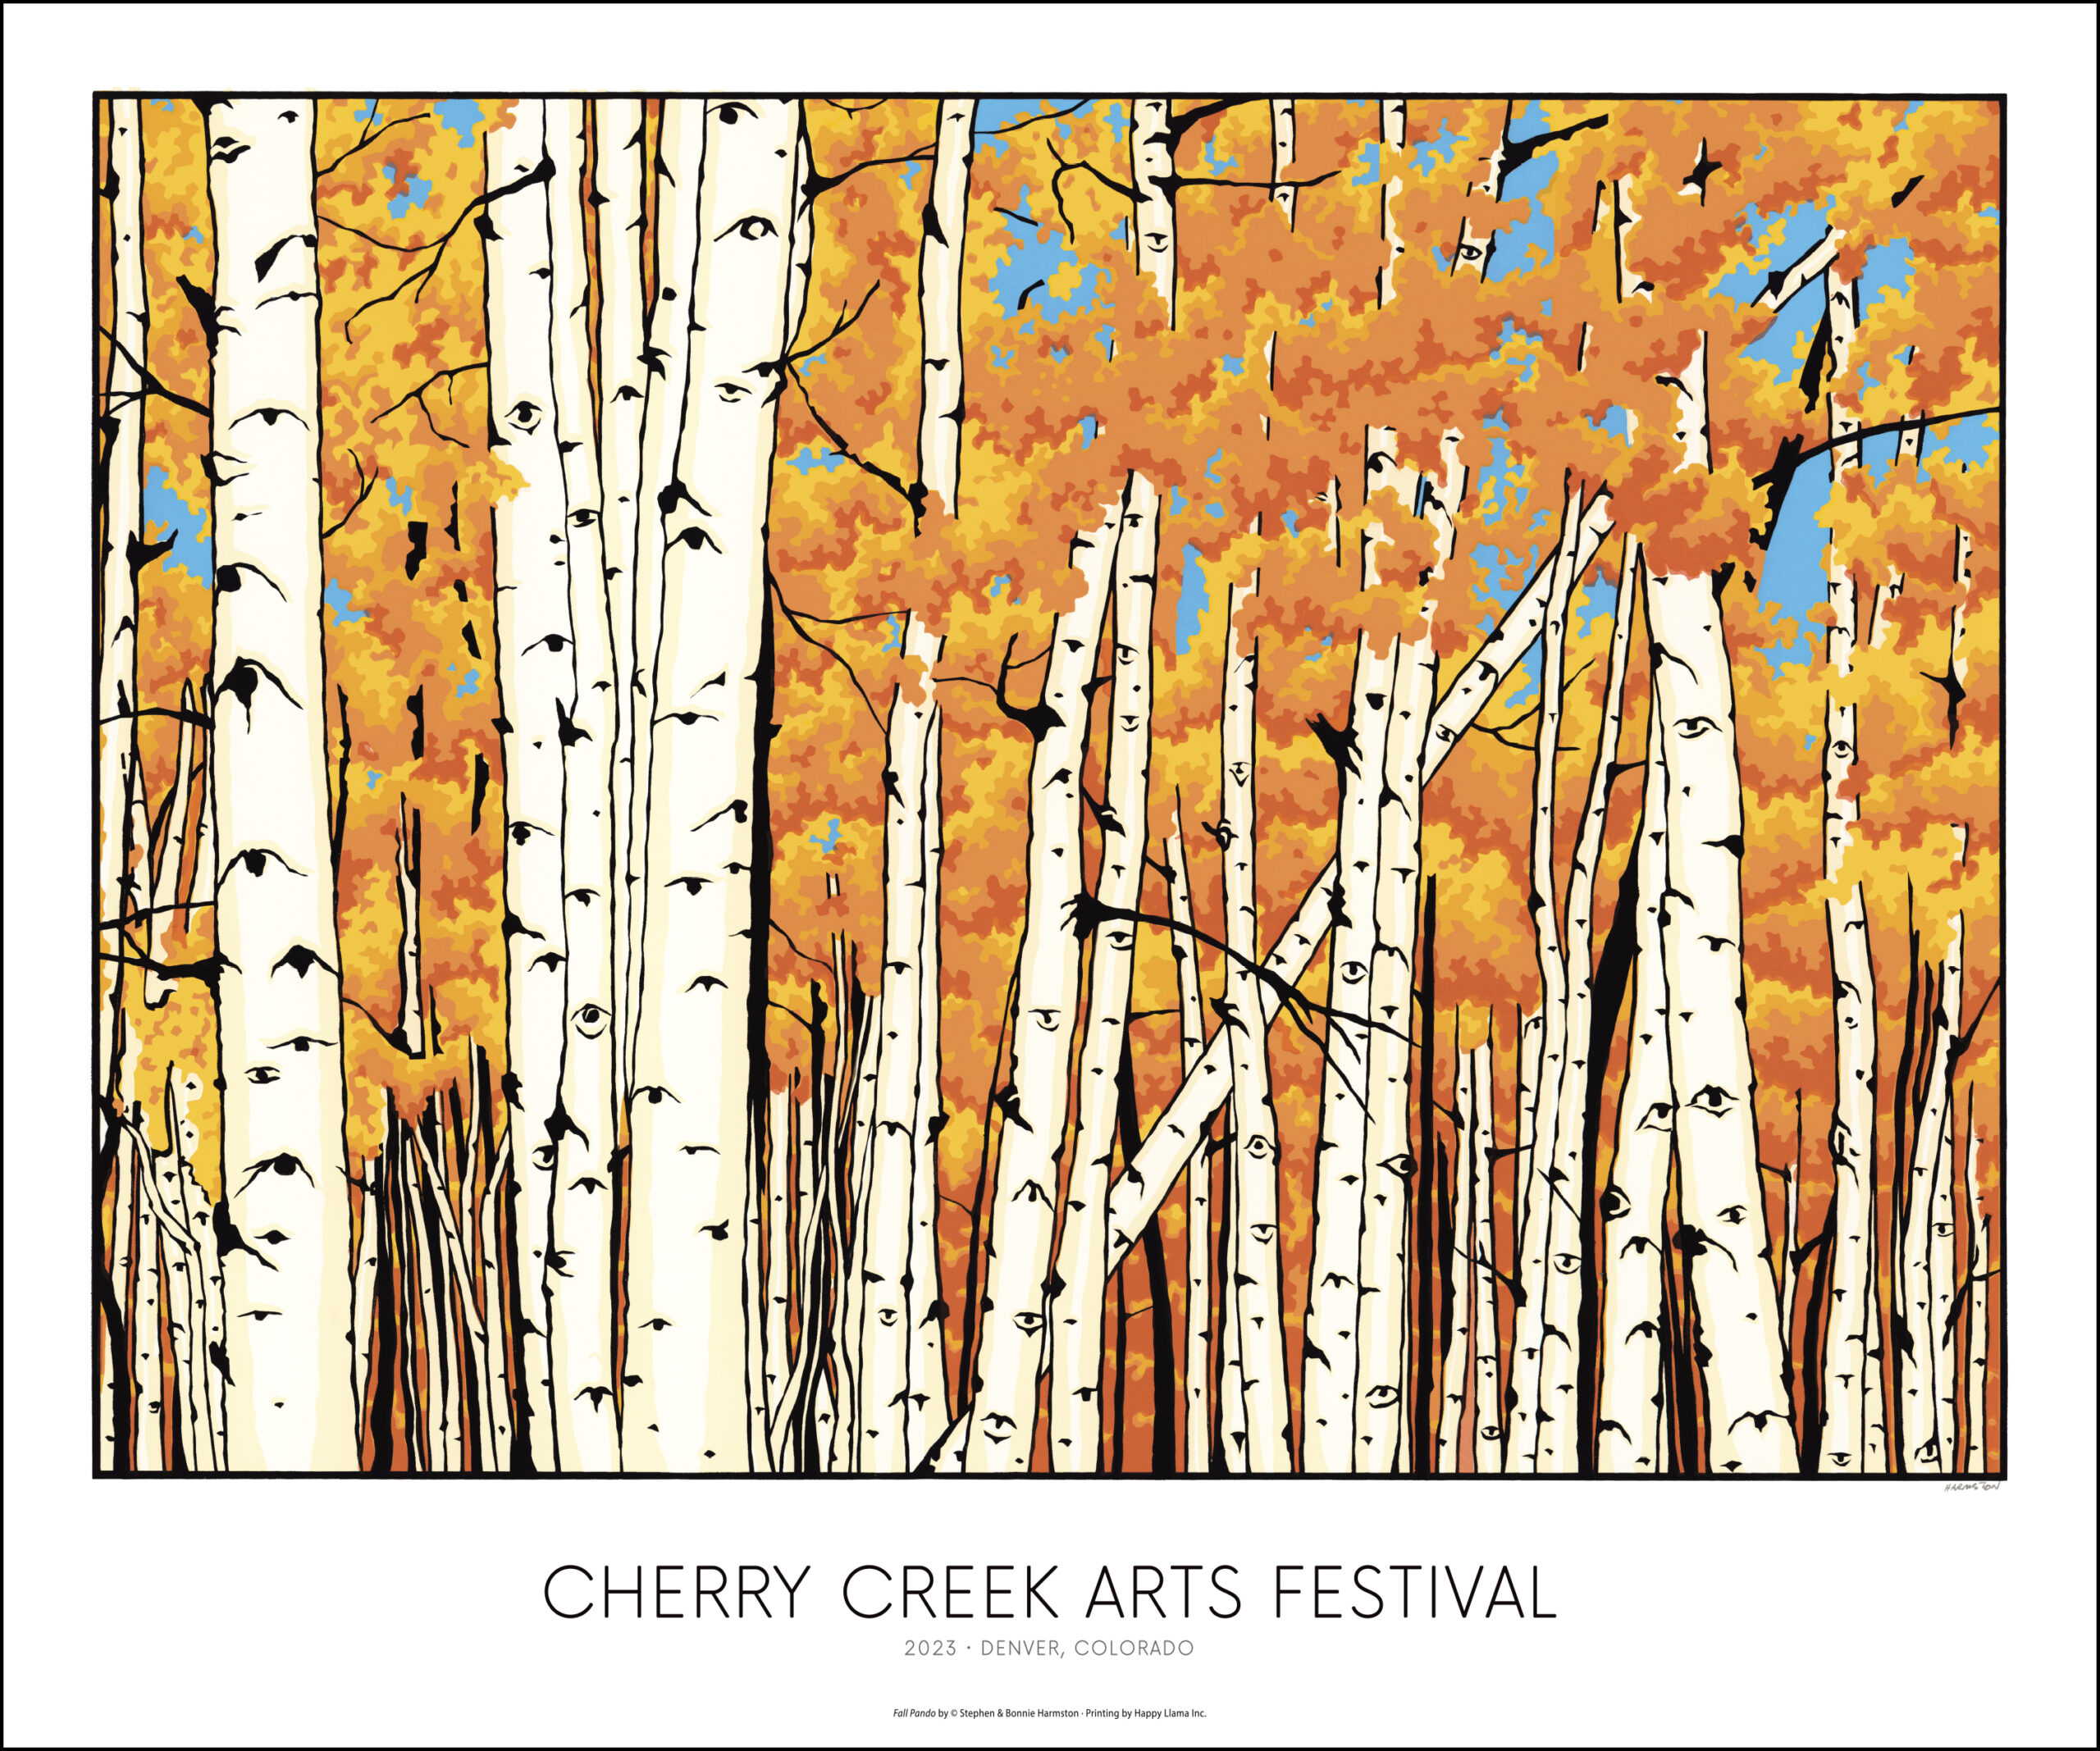 Artwork of Fall aspen trees by Stephen & Bonnie Harmston